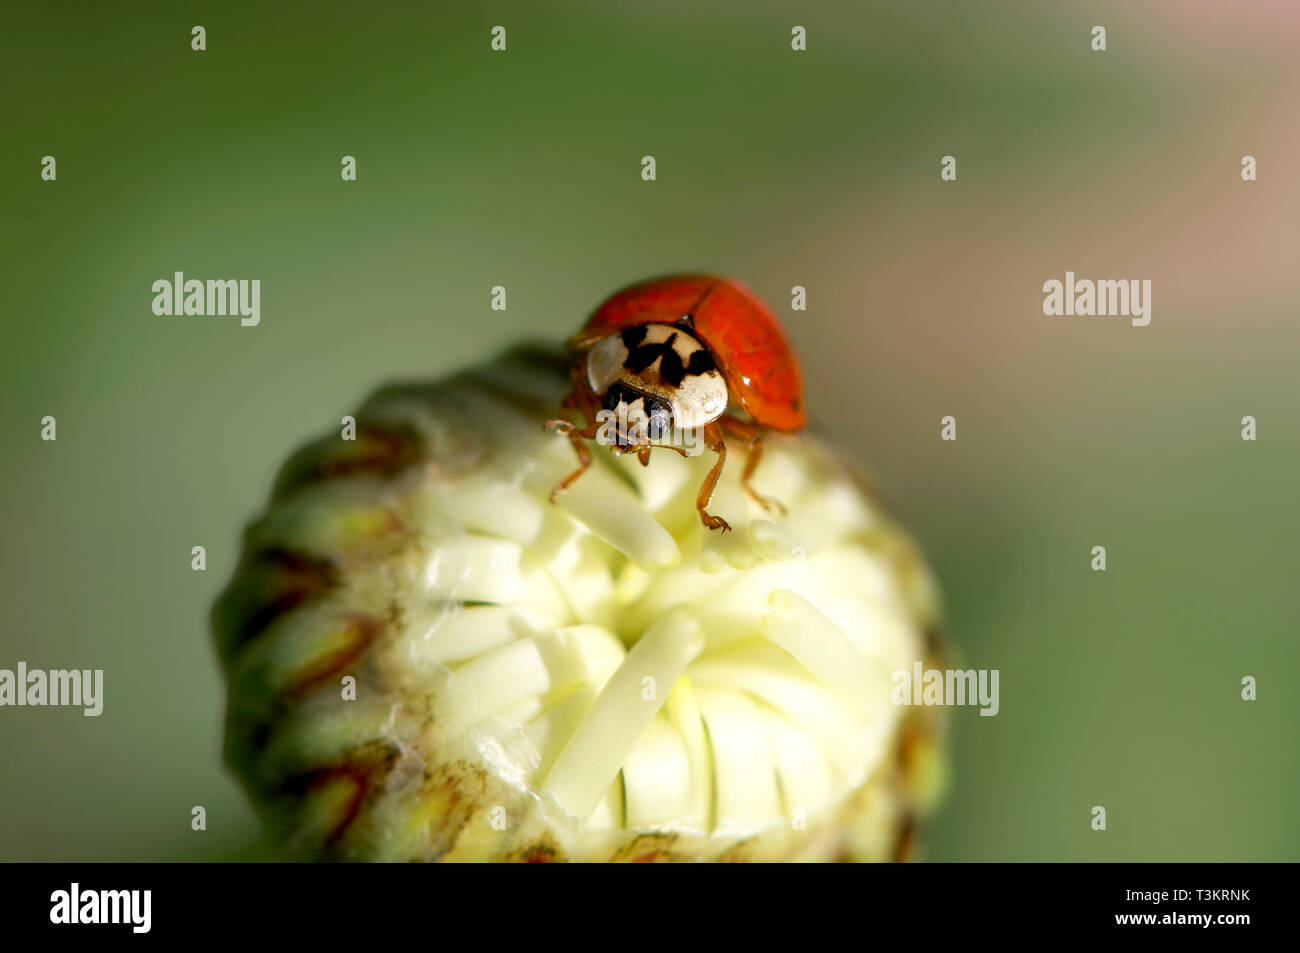 An Asian Lady Beetle (Coccinellidae) on a Shasta Daisy bud (Leucanthemum x superbum) Stock Photo